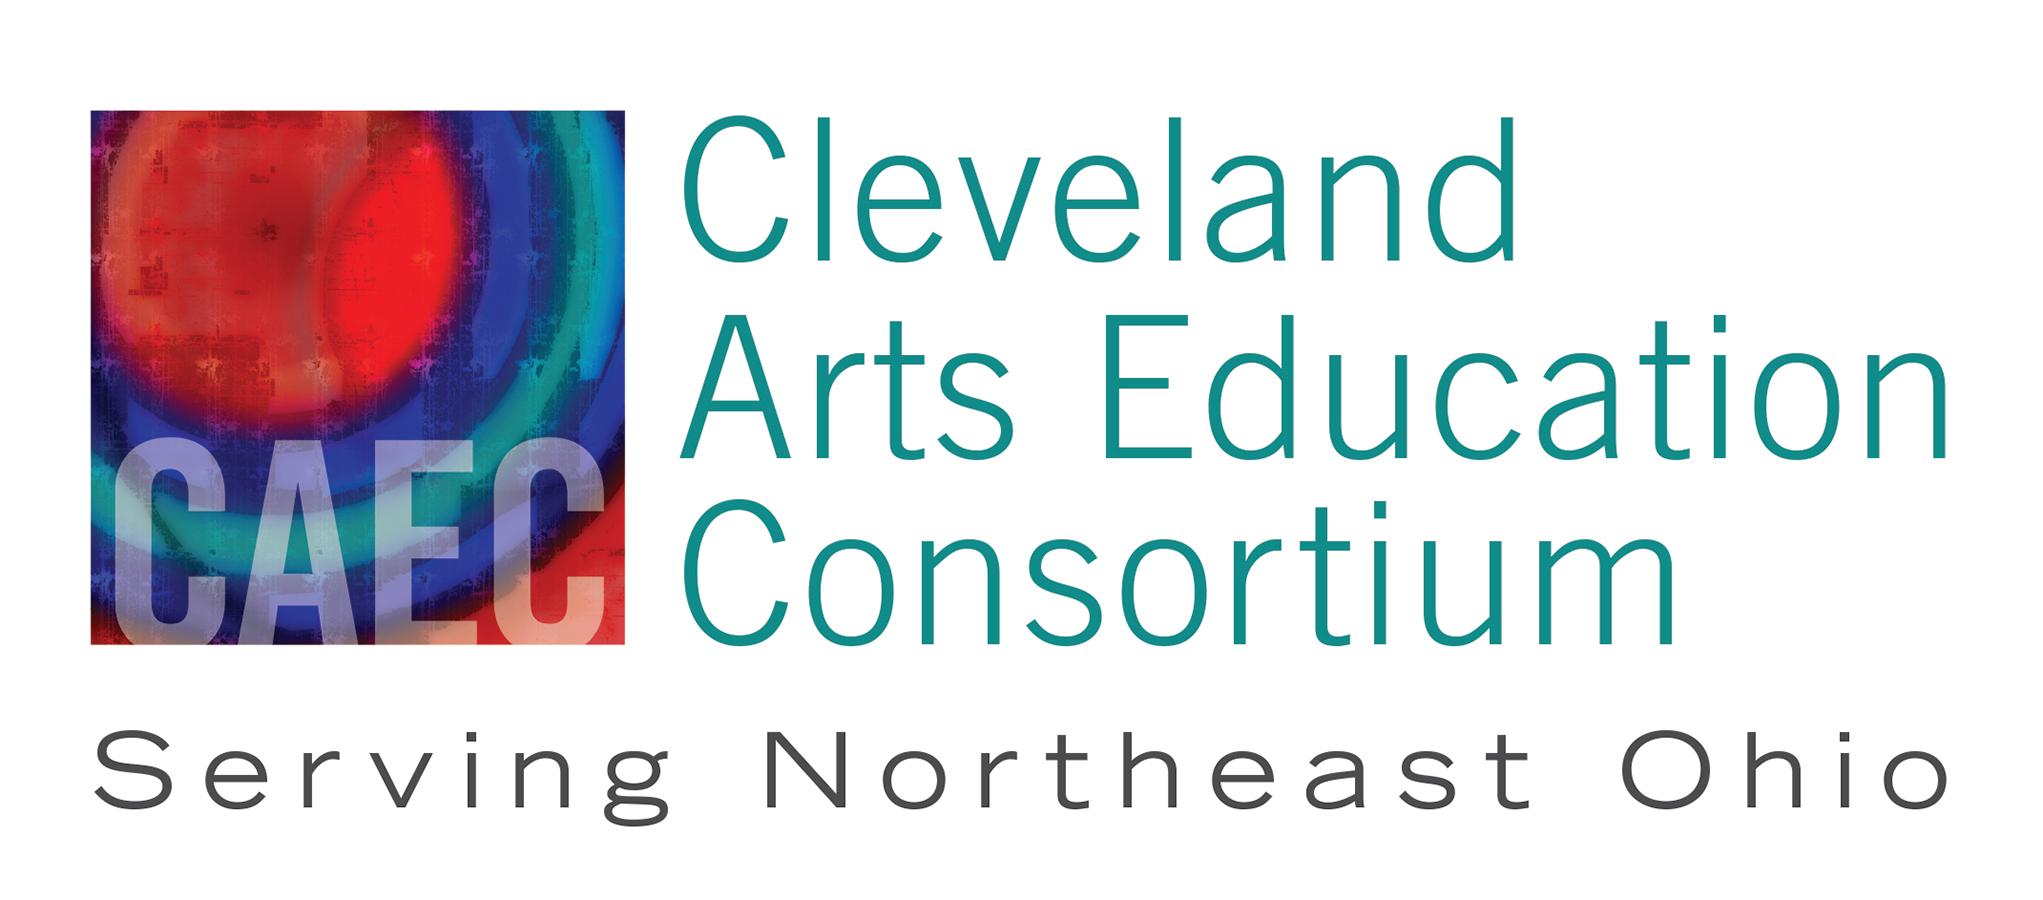 Cleveland Arts Education Consortium